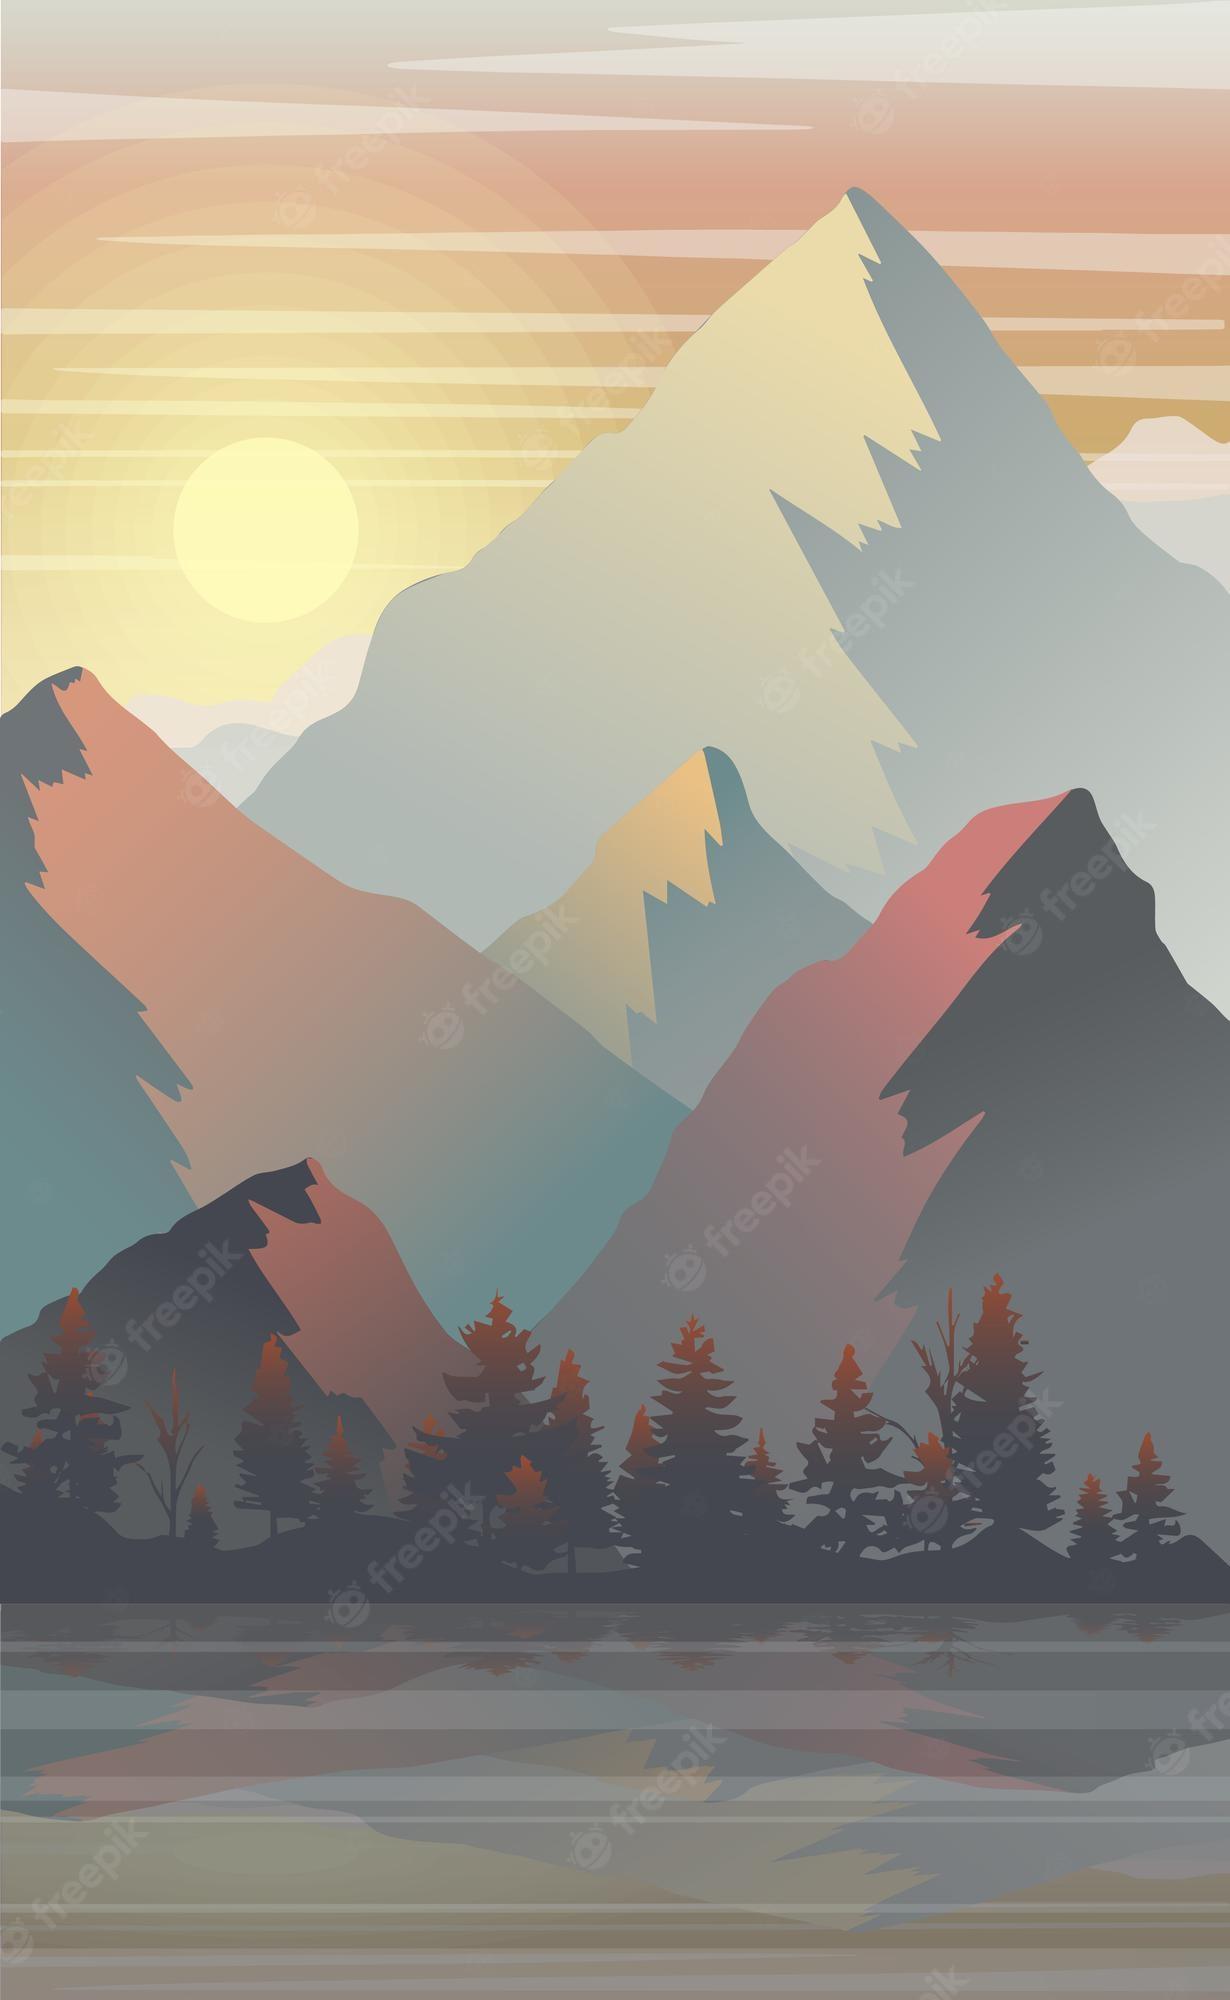 Drawn Mountain Wallpapers - Top Free Drawn Mountain Backgrounds ...